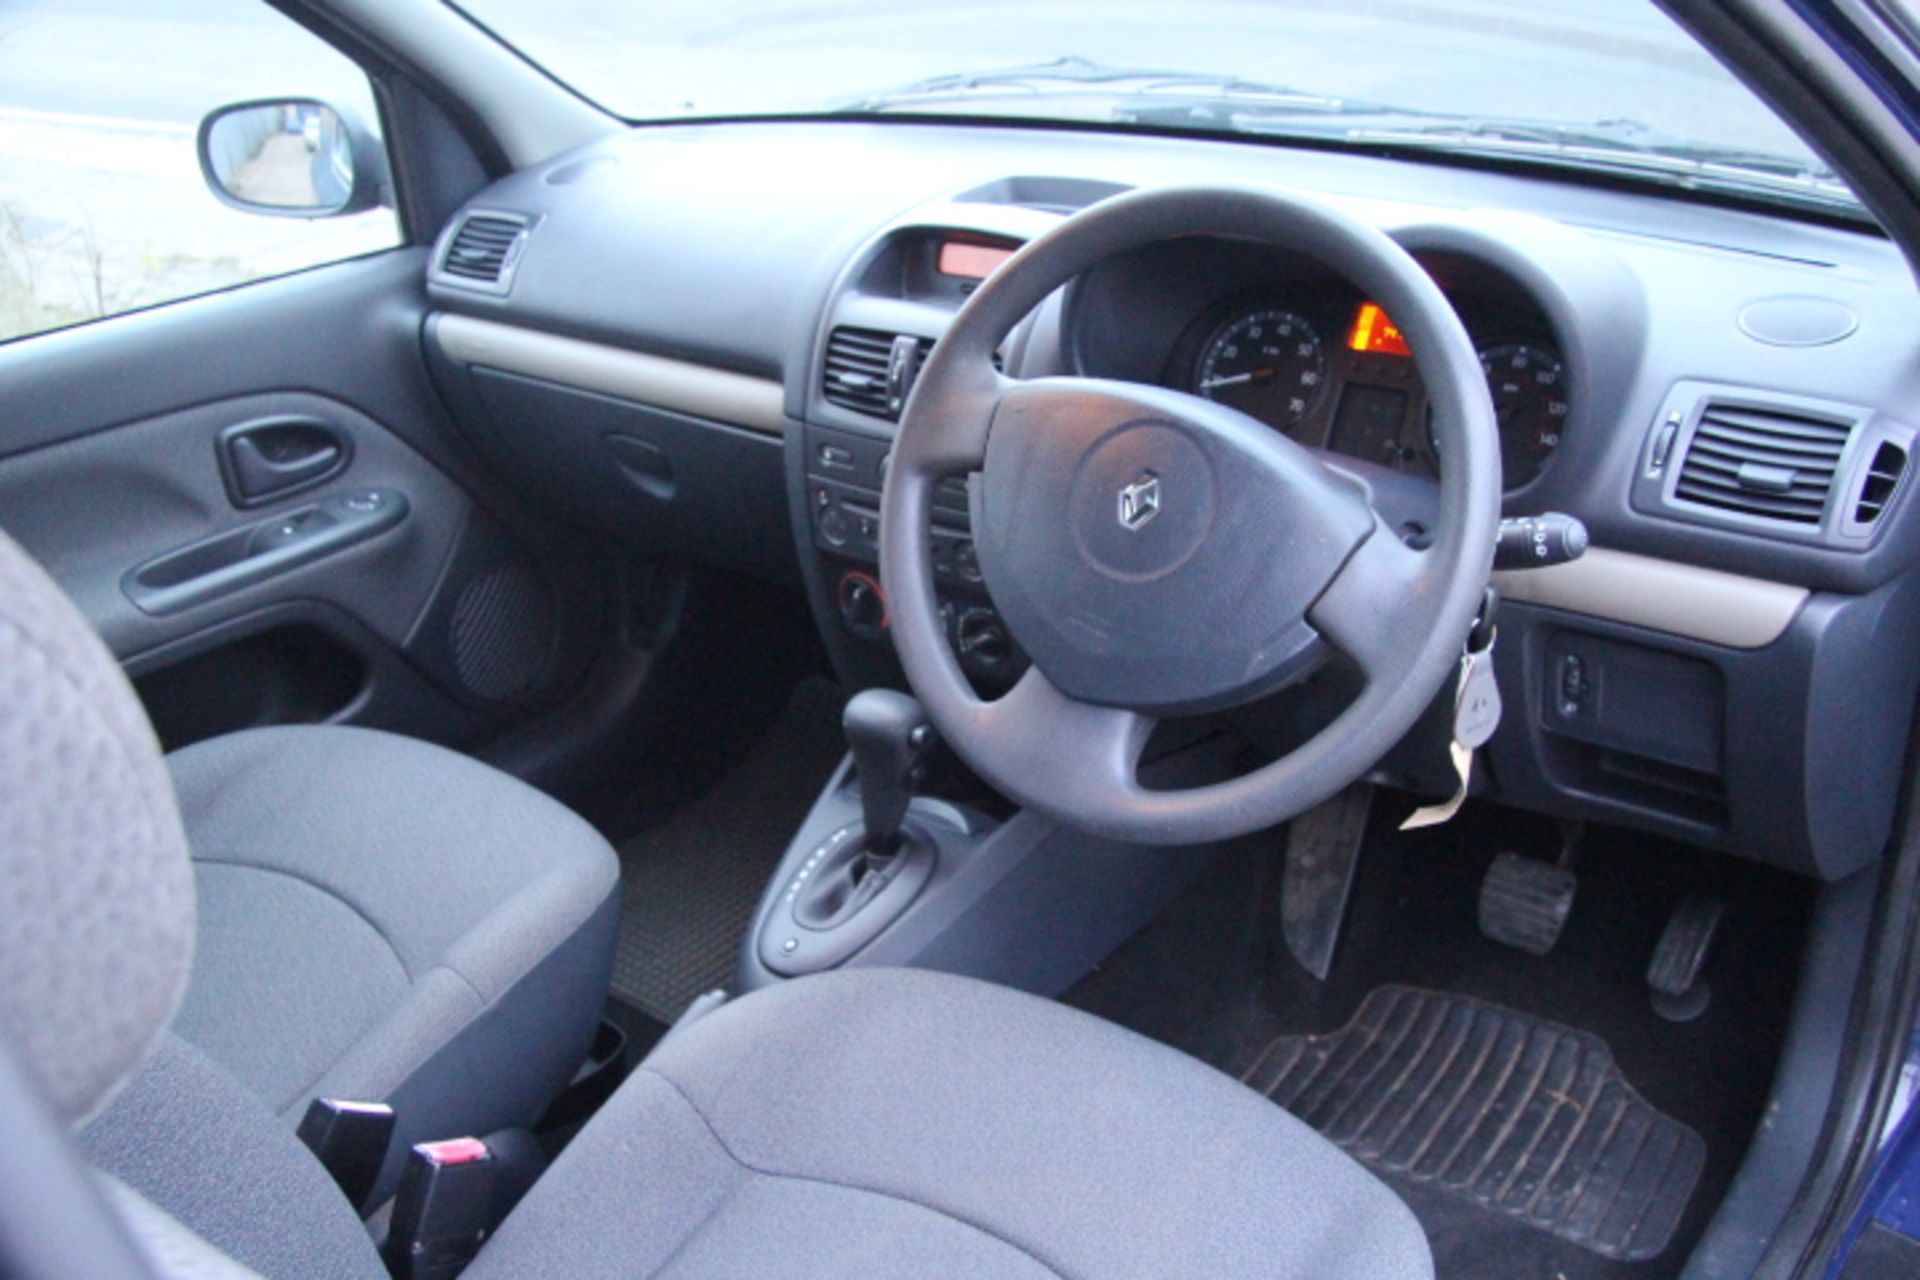 Renault Clio KT04 EOX 1.4 Petrol Auto - Keys - MOT Till April 2015 (No Certificate) - Mileage 74, - Image 5 of 5